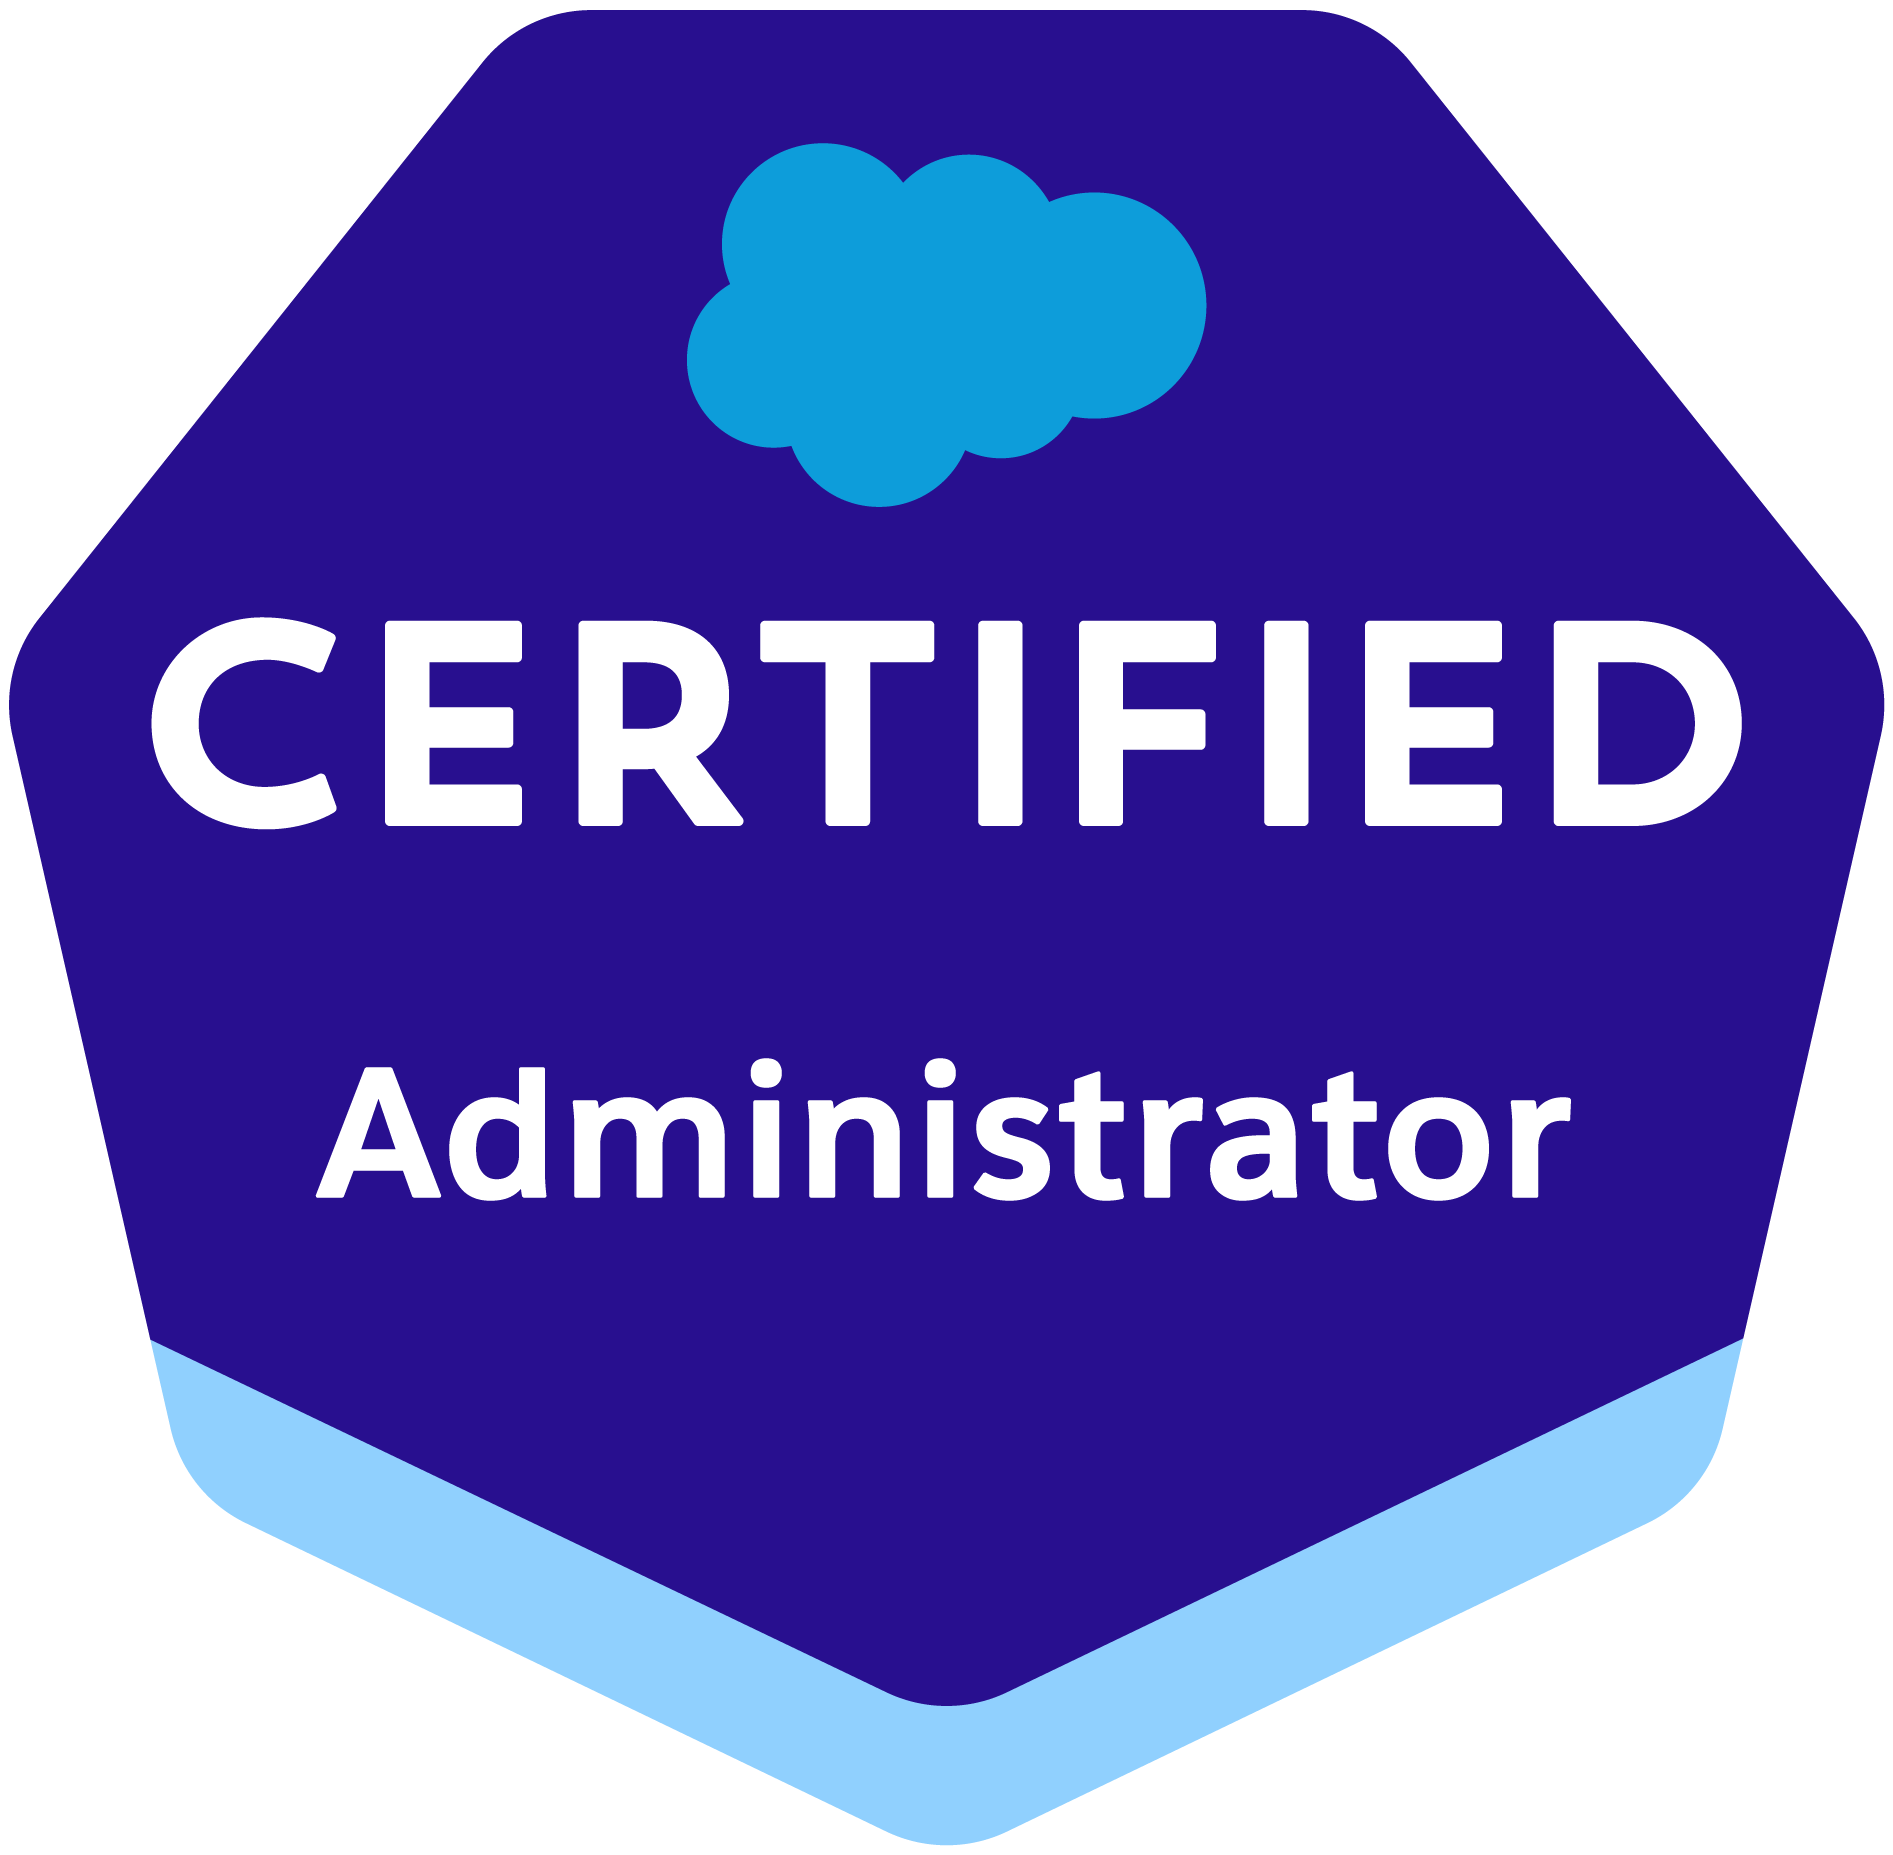 Salesforce Advanced Administrator Certification